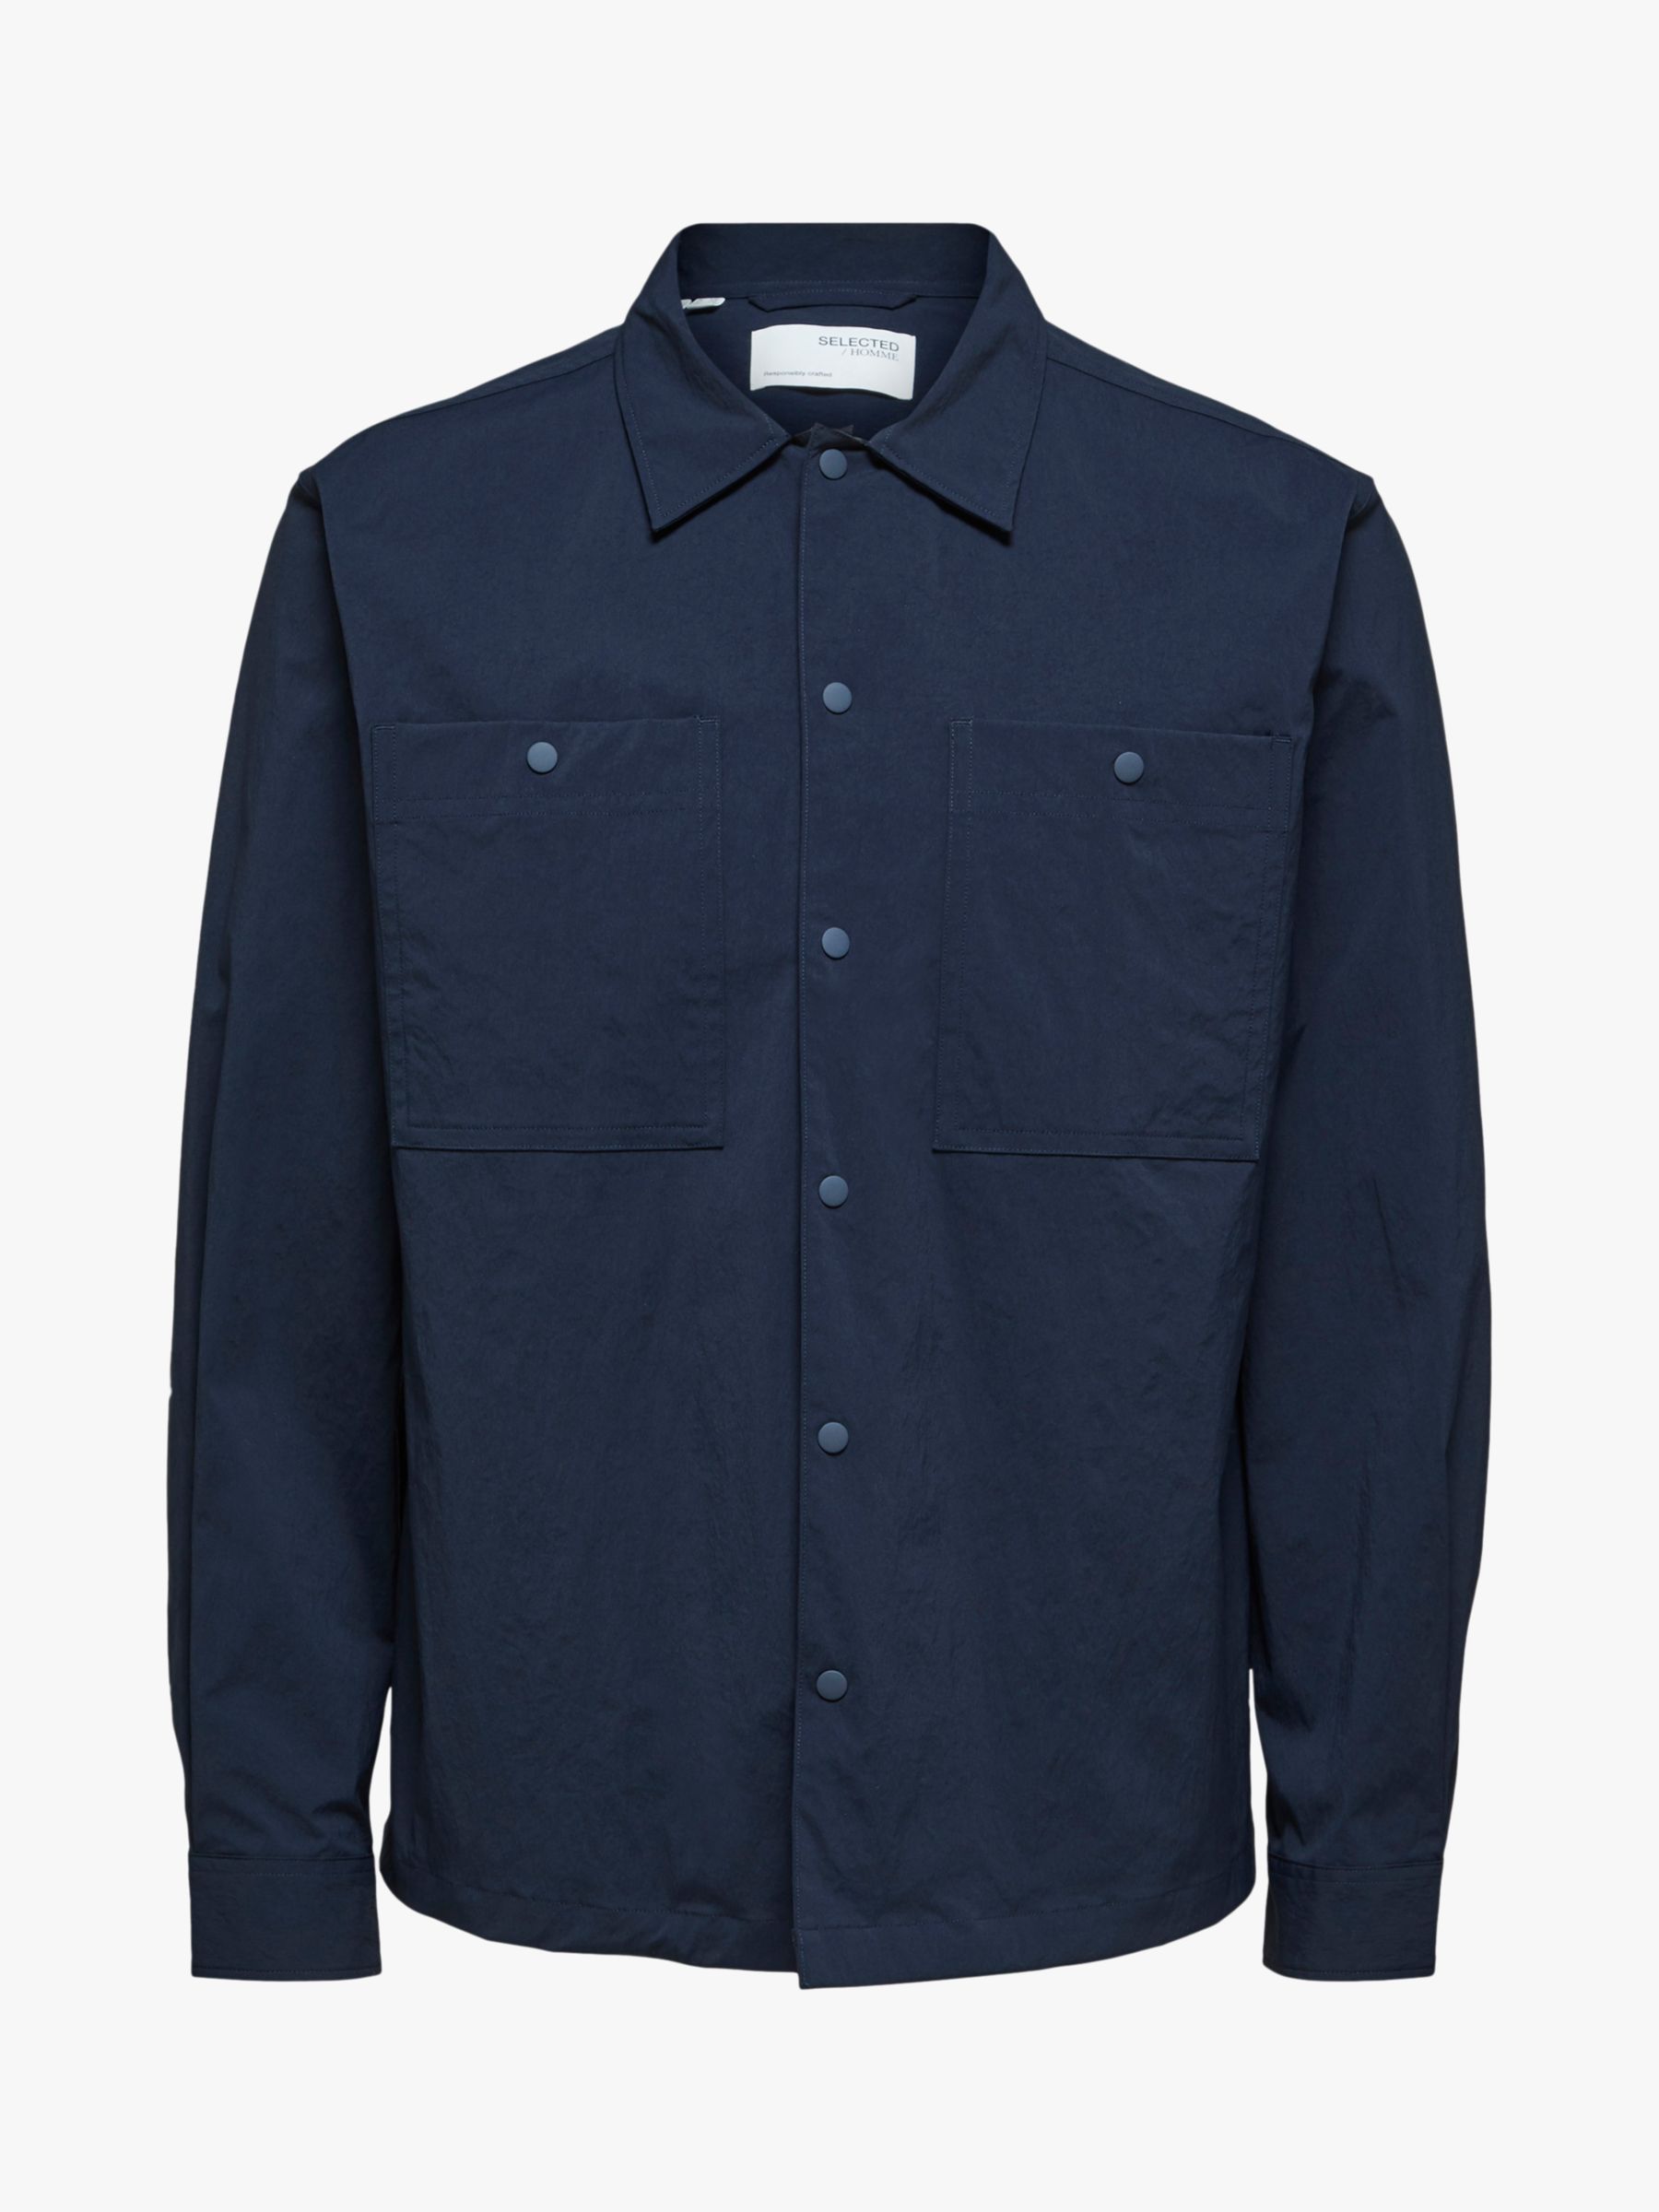 SELECTED HOMME Long Sleeve Shirt, Dark Sapphire at John Lewis & Partners